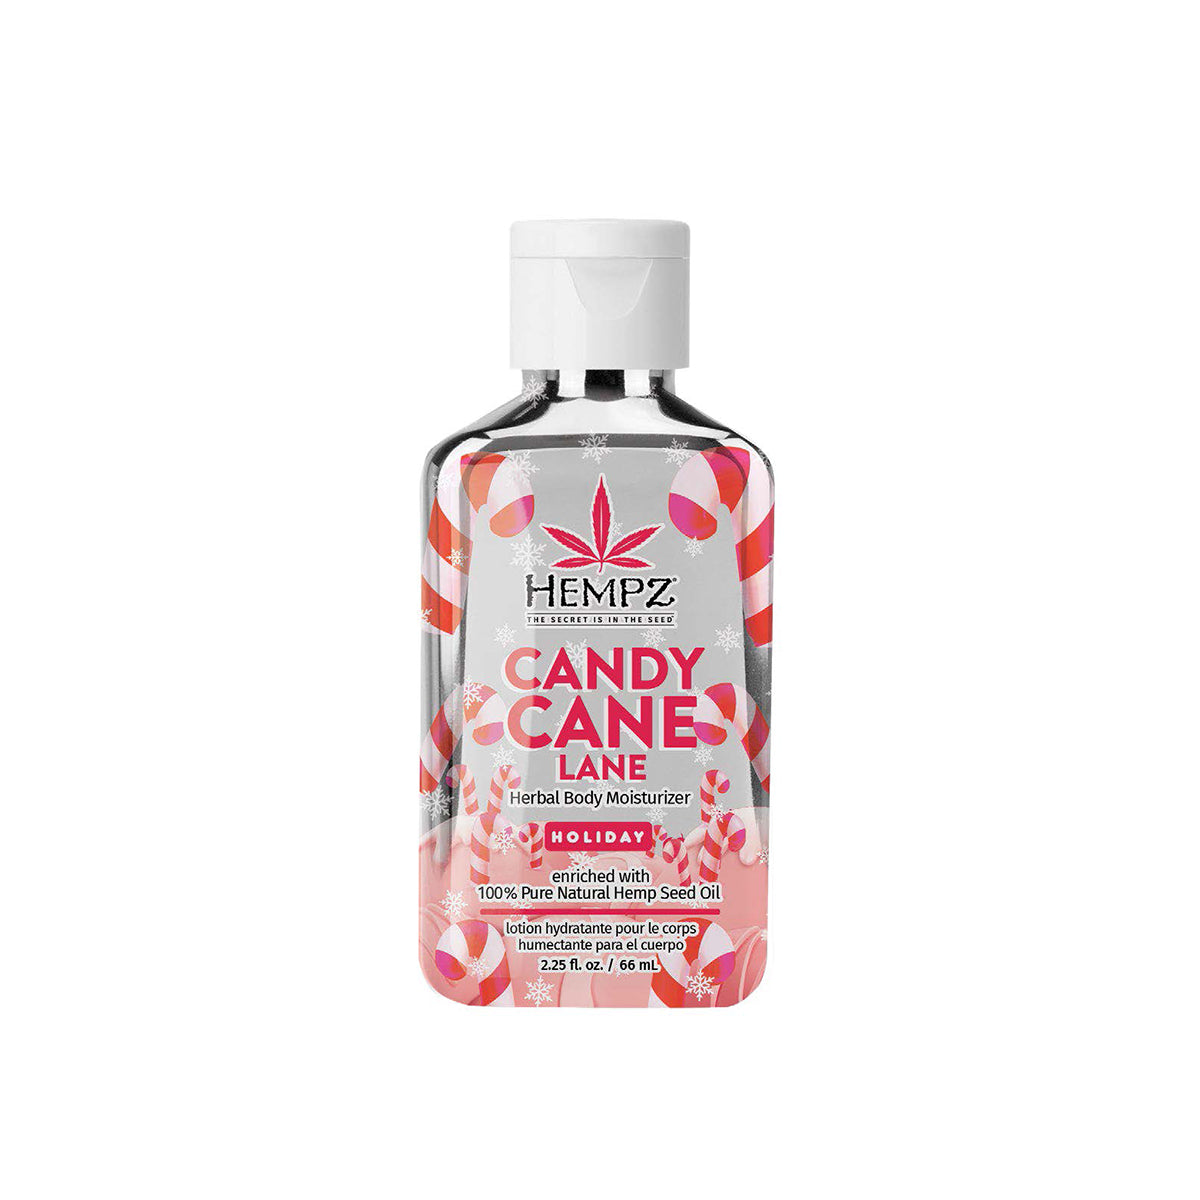 Hempz - Candy Cane Lane Herbal Body Moisturizer - Creata Beauty - Professional Beauty Products